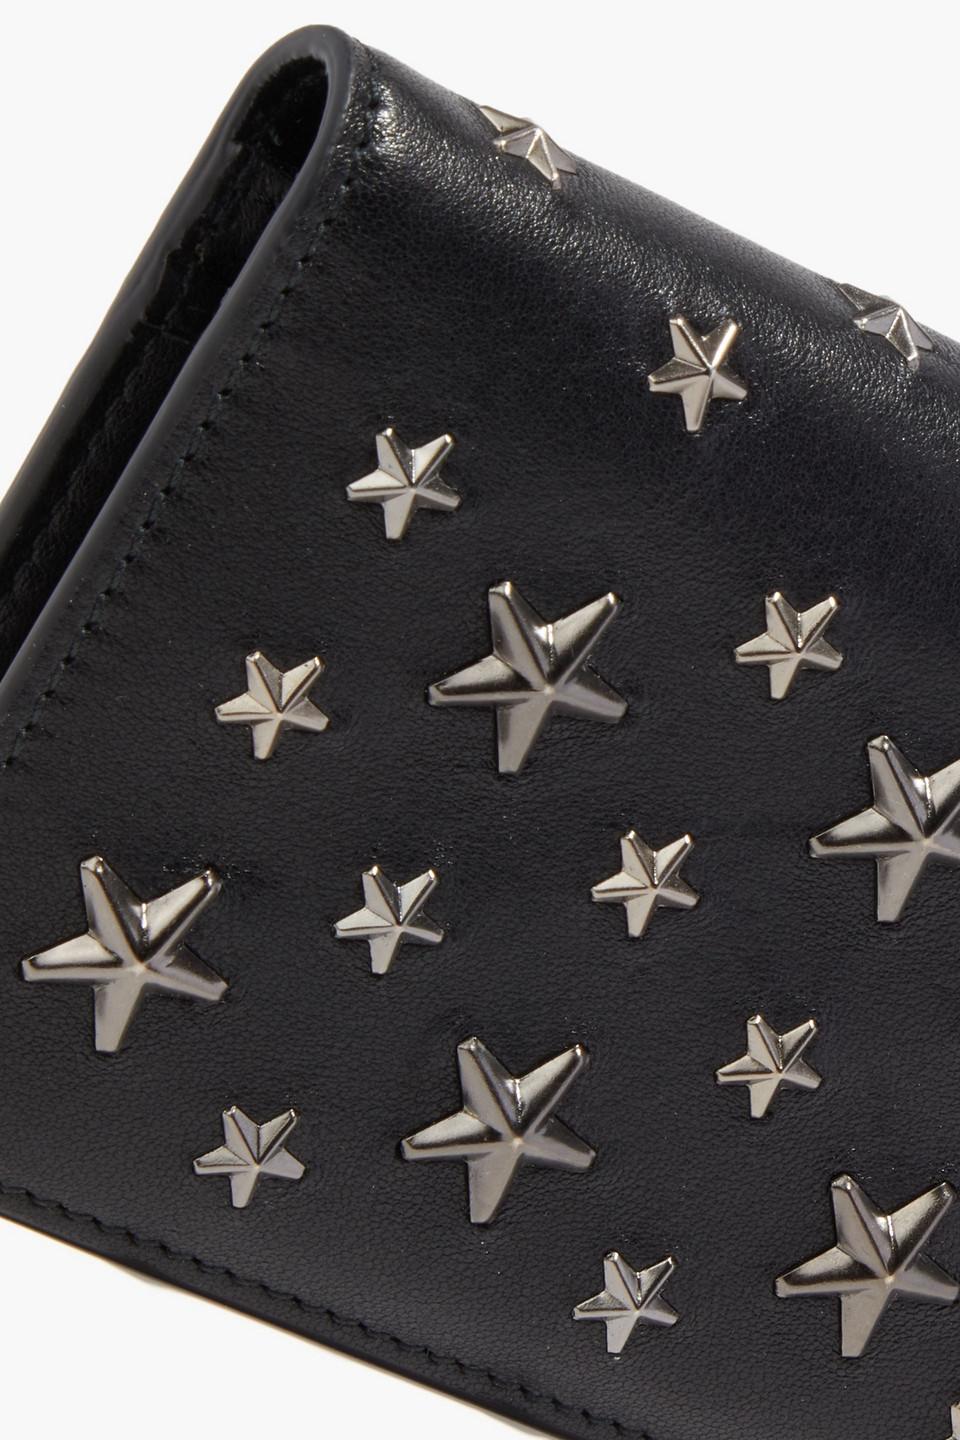 Jimmy Choo Cooper Studded Leather Wallet in Black for Men